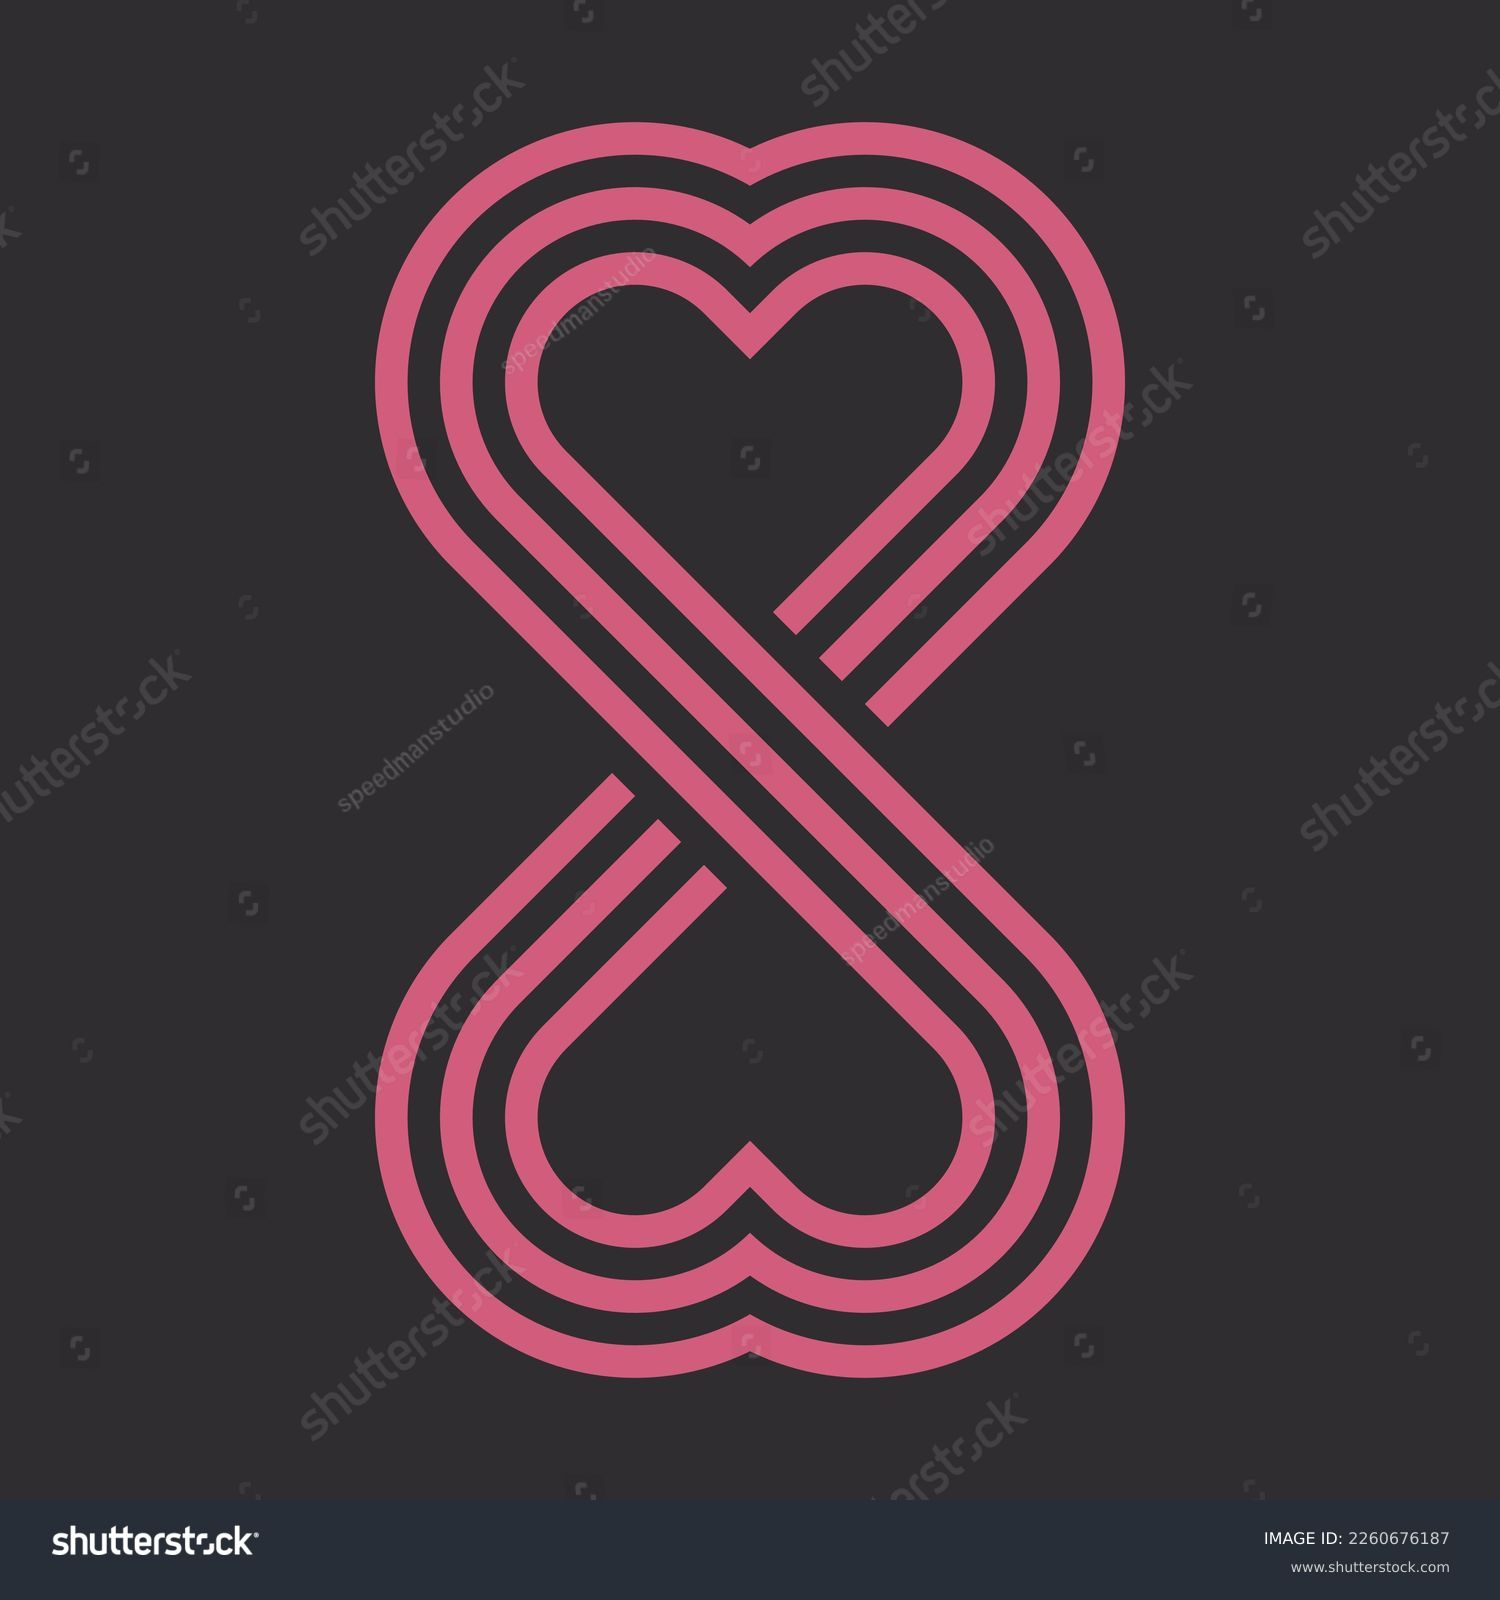 SVG of Heart shape symmetrical infinity pattern. 3 red stripes, black background. Double heart design, logo, symbol, icon. Vector illustration. svg